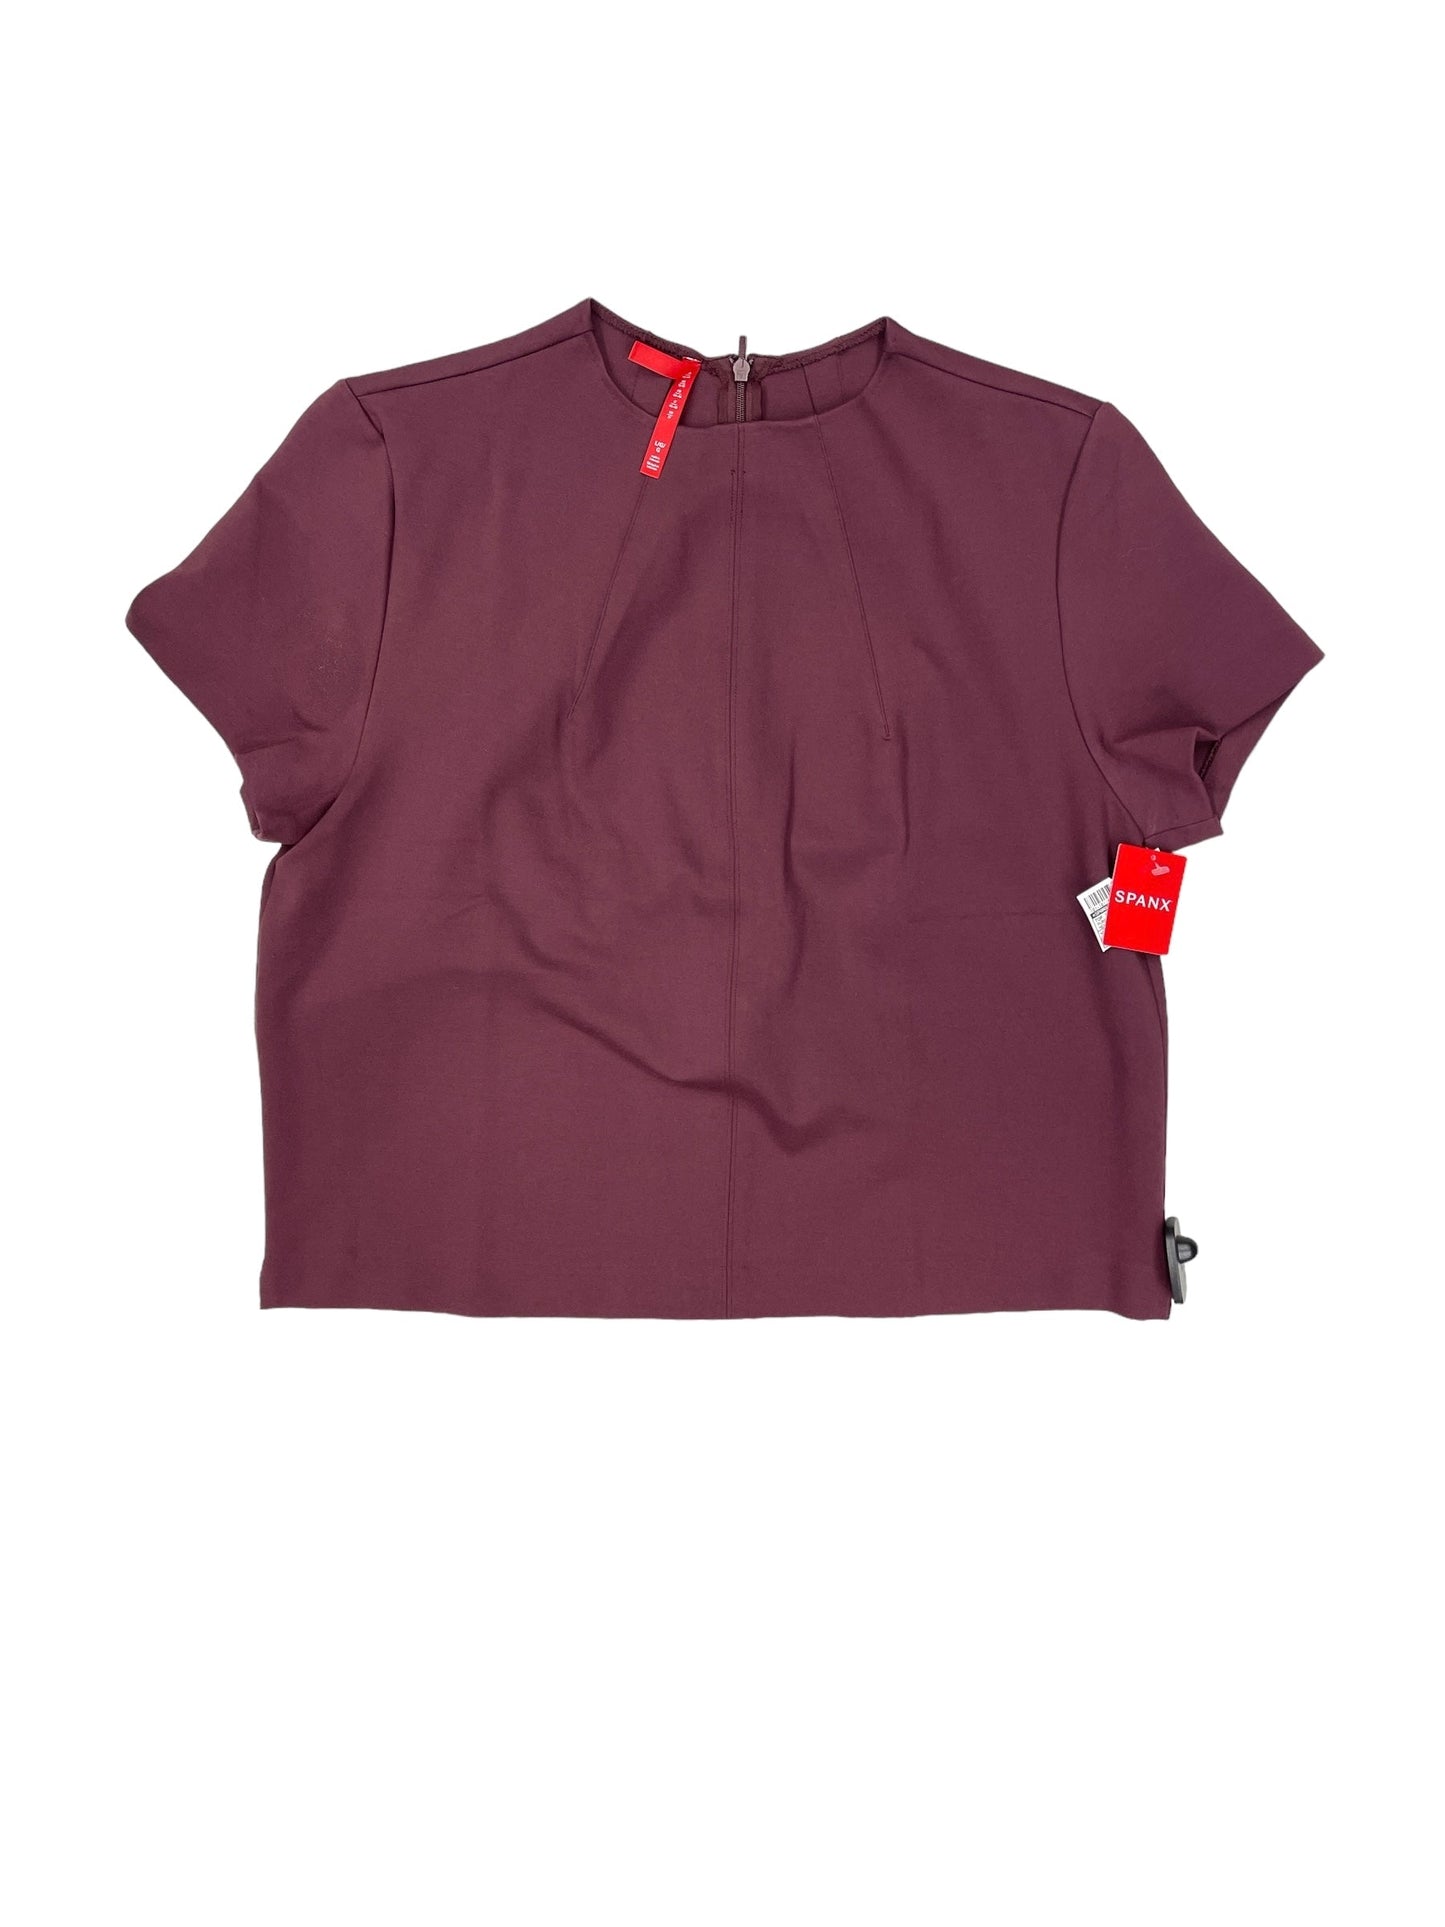 Purple Top Short Sleeve Spanx, Size L